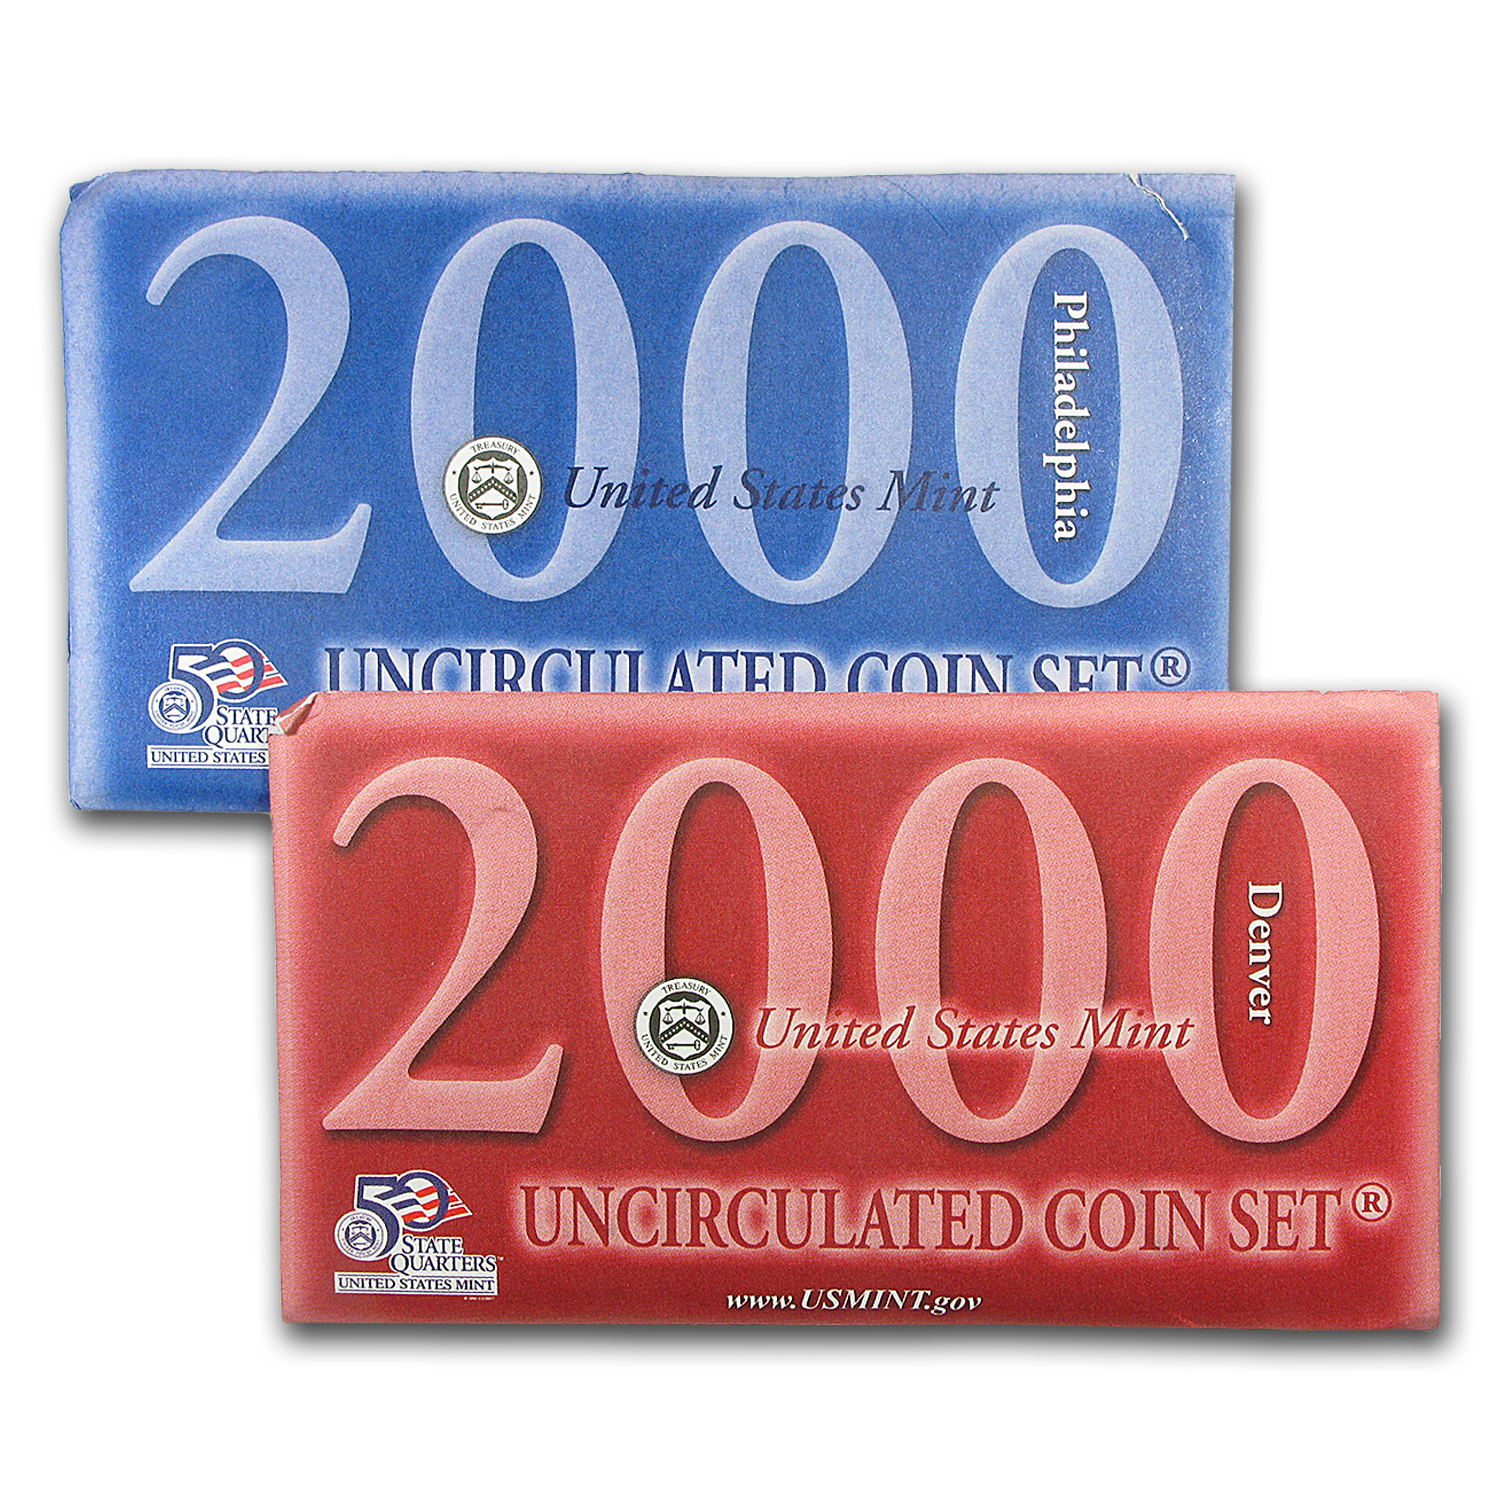 Buy 2000 U.S. Mint Set